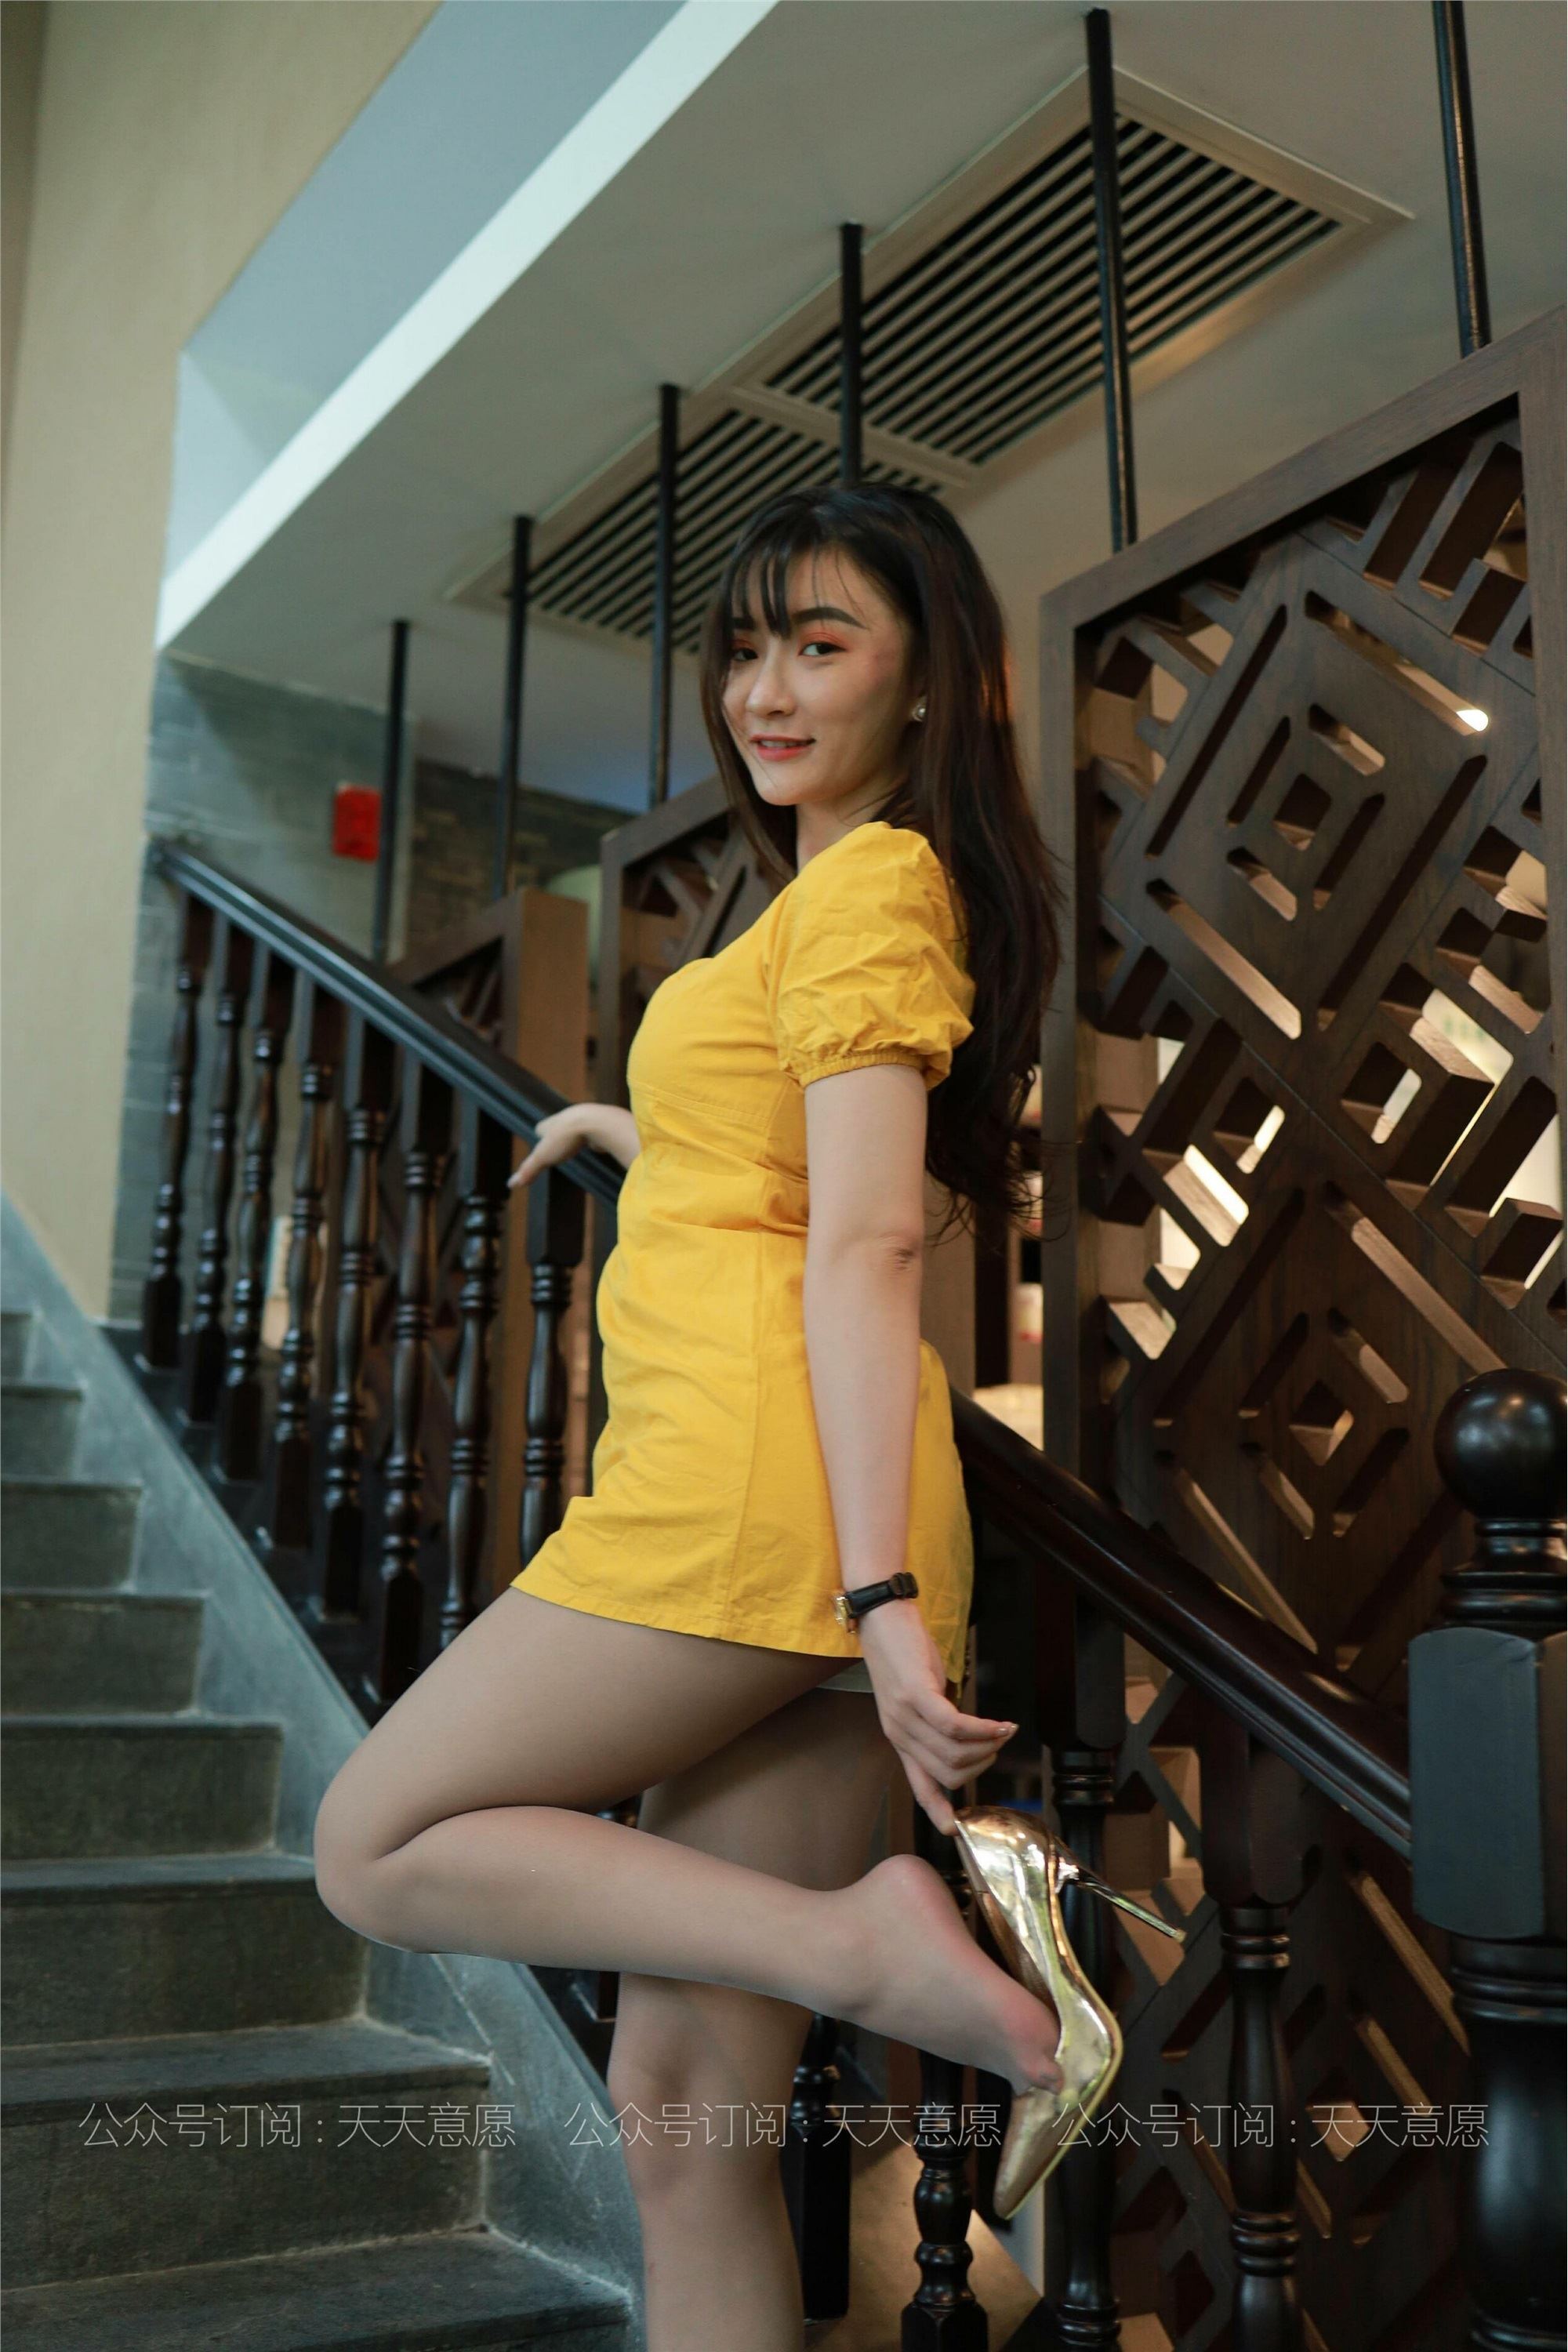 Model: Qiu Qiu's Dress with Egg Yolk